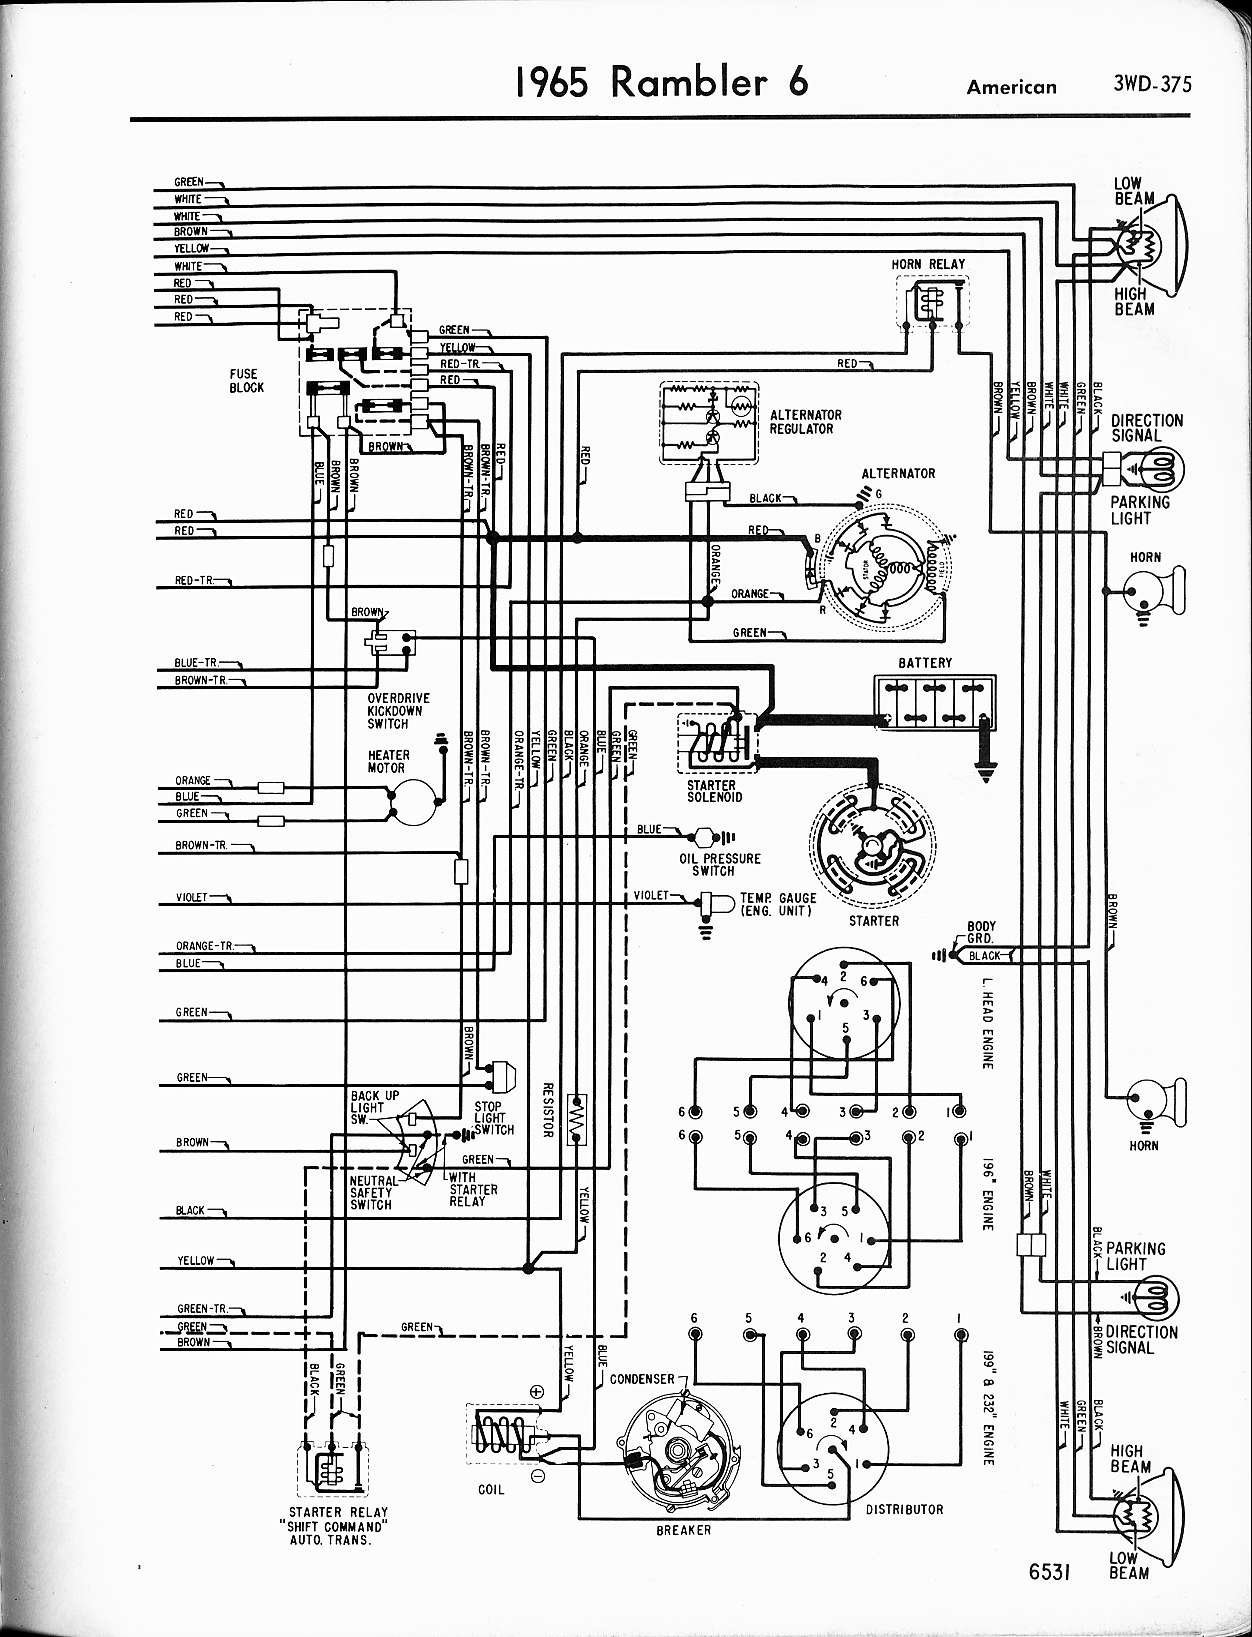 Rambler wiring diagrams - The Old Car Manual Project 1968 amc rebel wiring diagram 